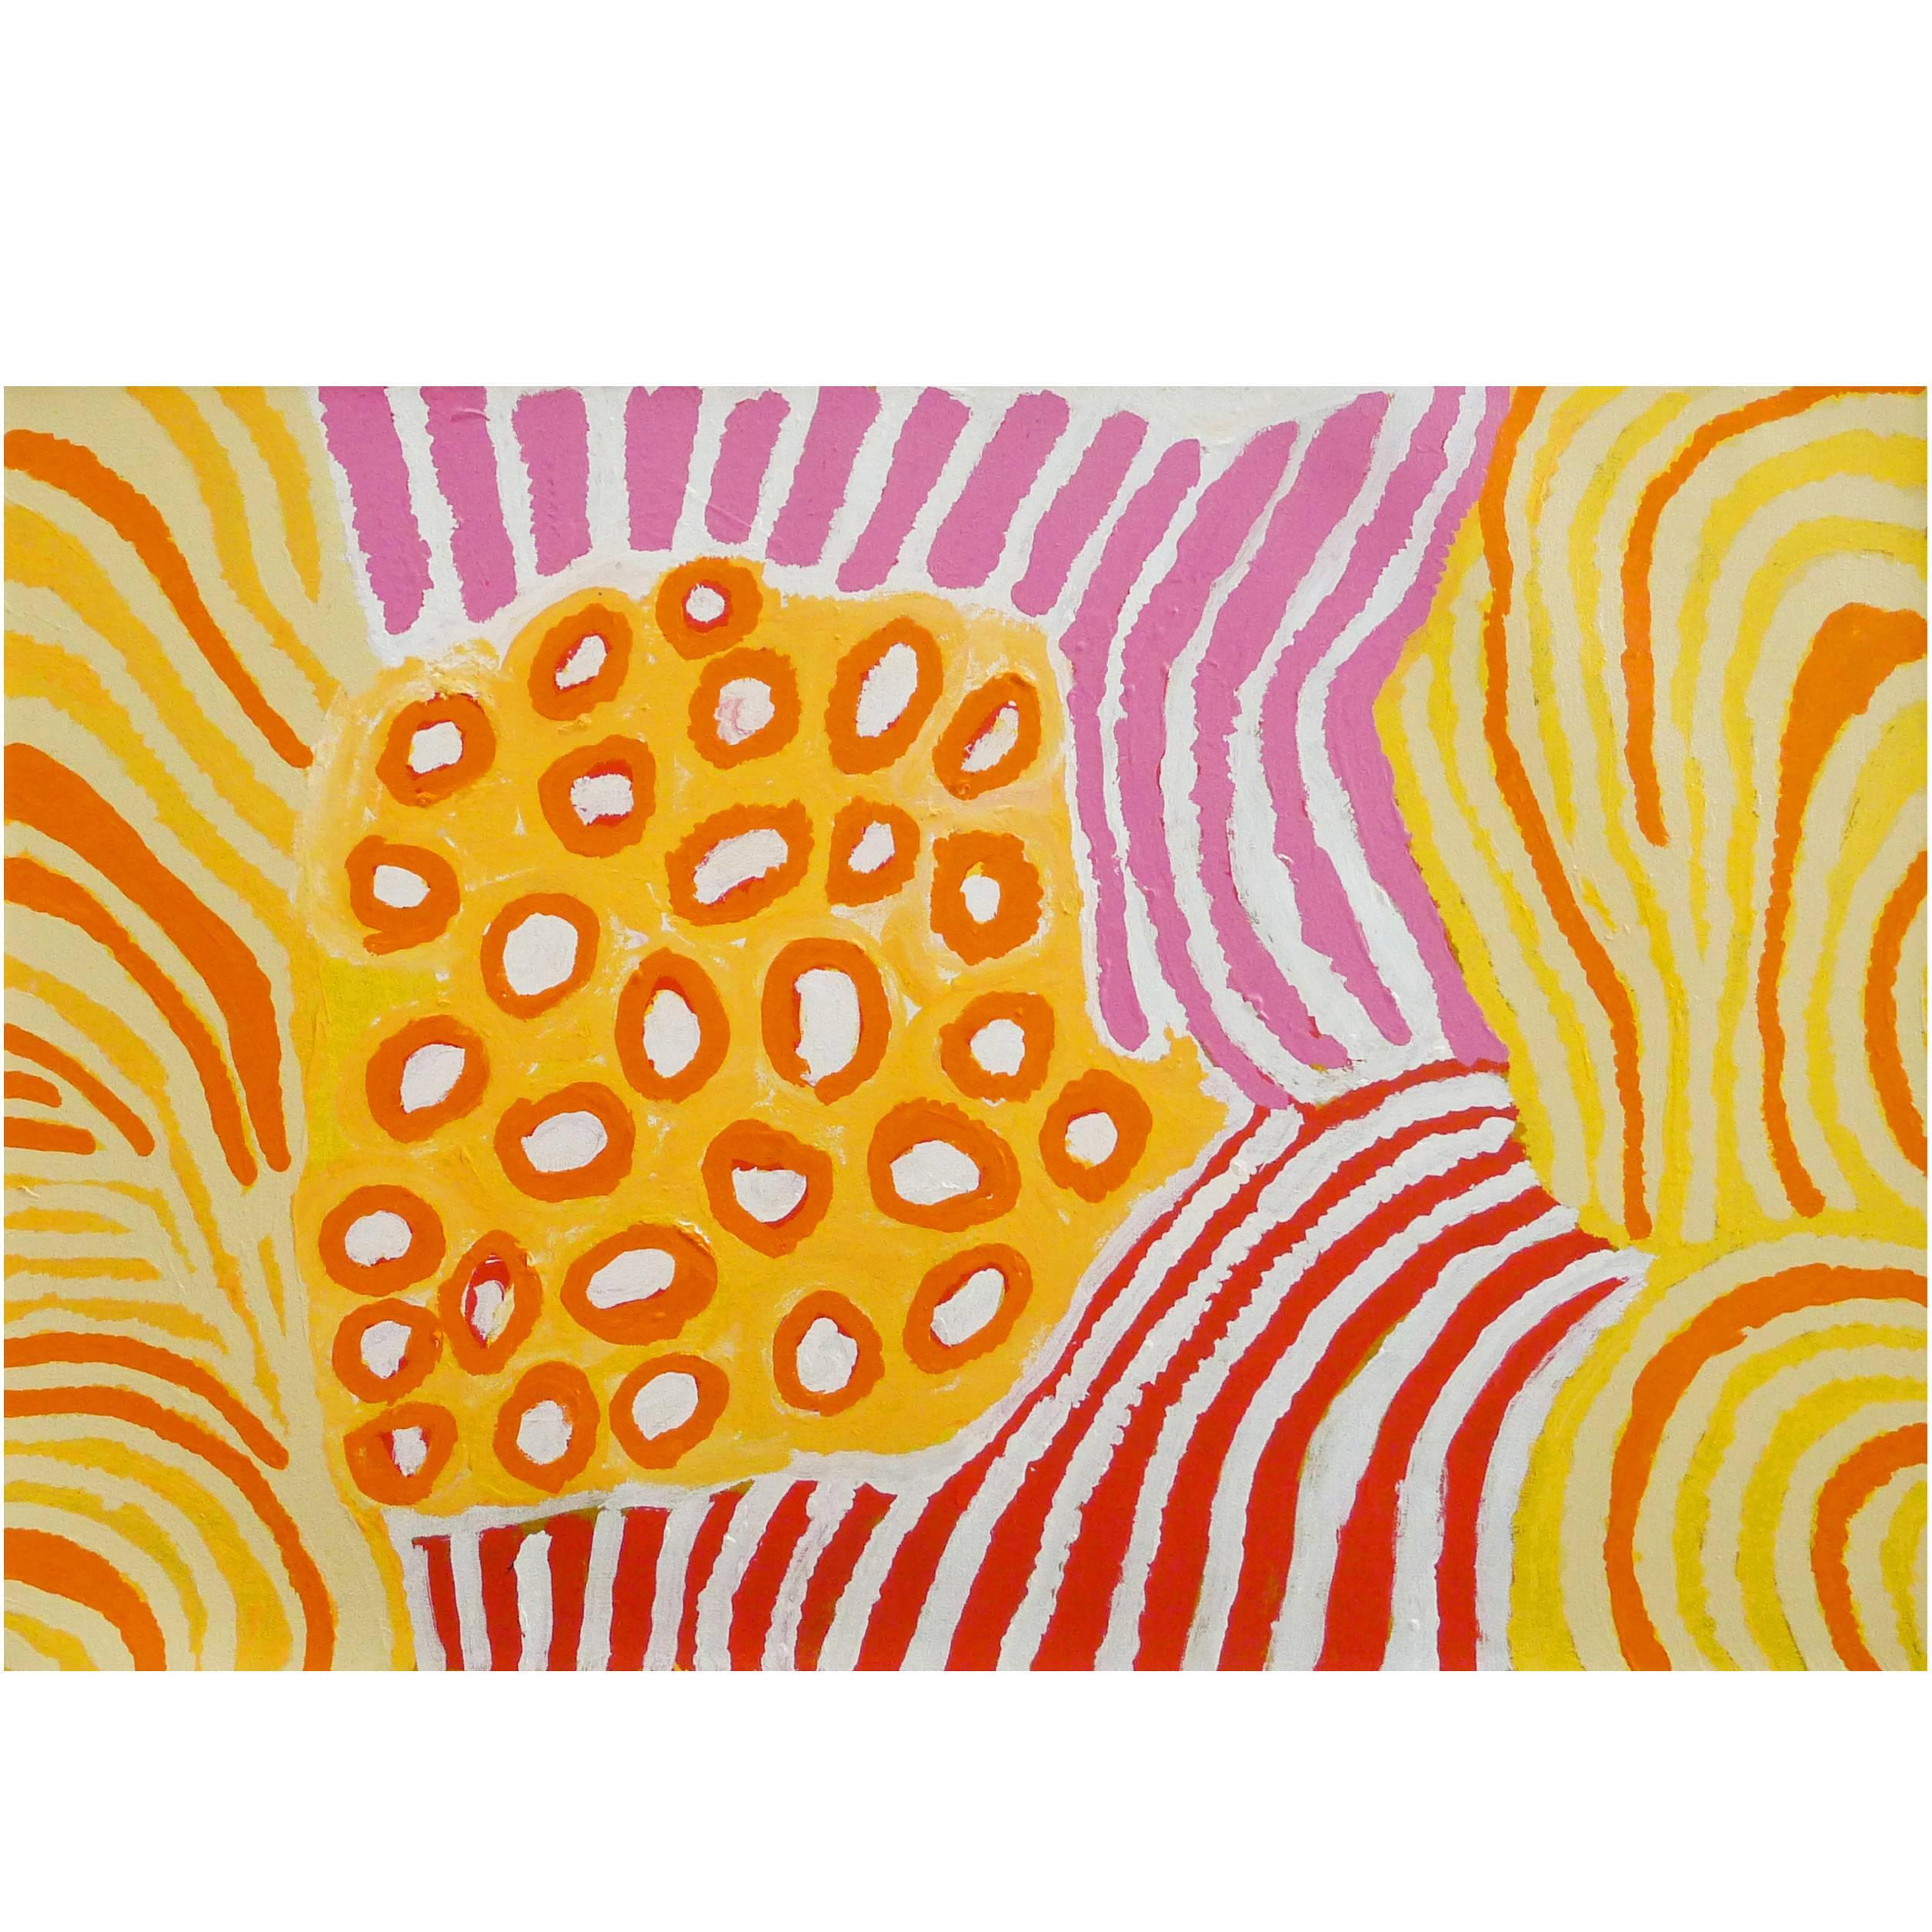 Australian Aboriginal Painting with Yellow, Pink and Orange by Alice Nampitjinpa